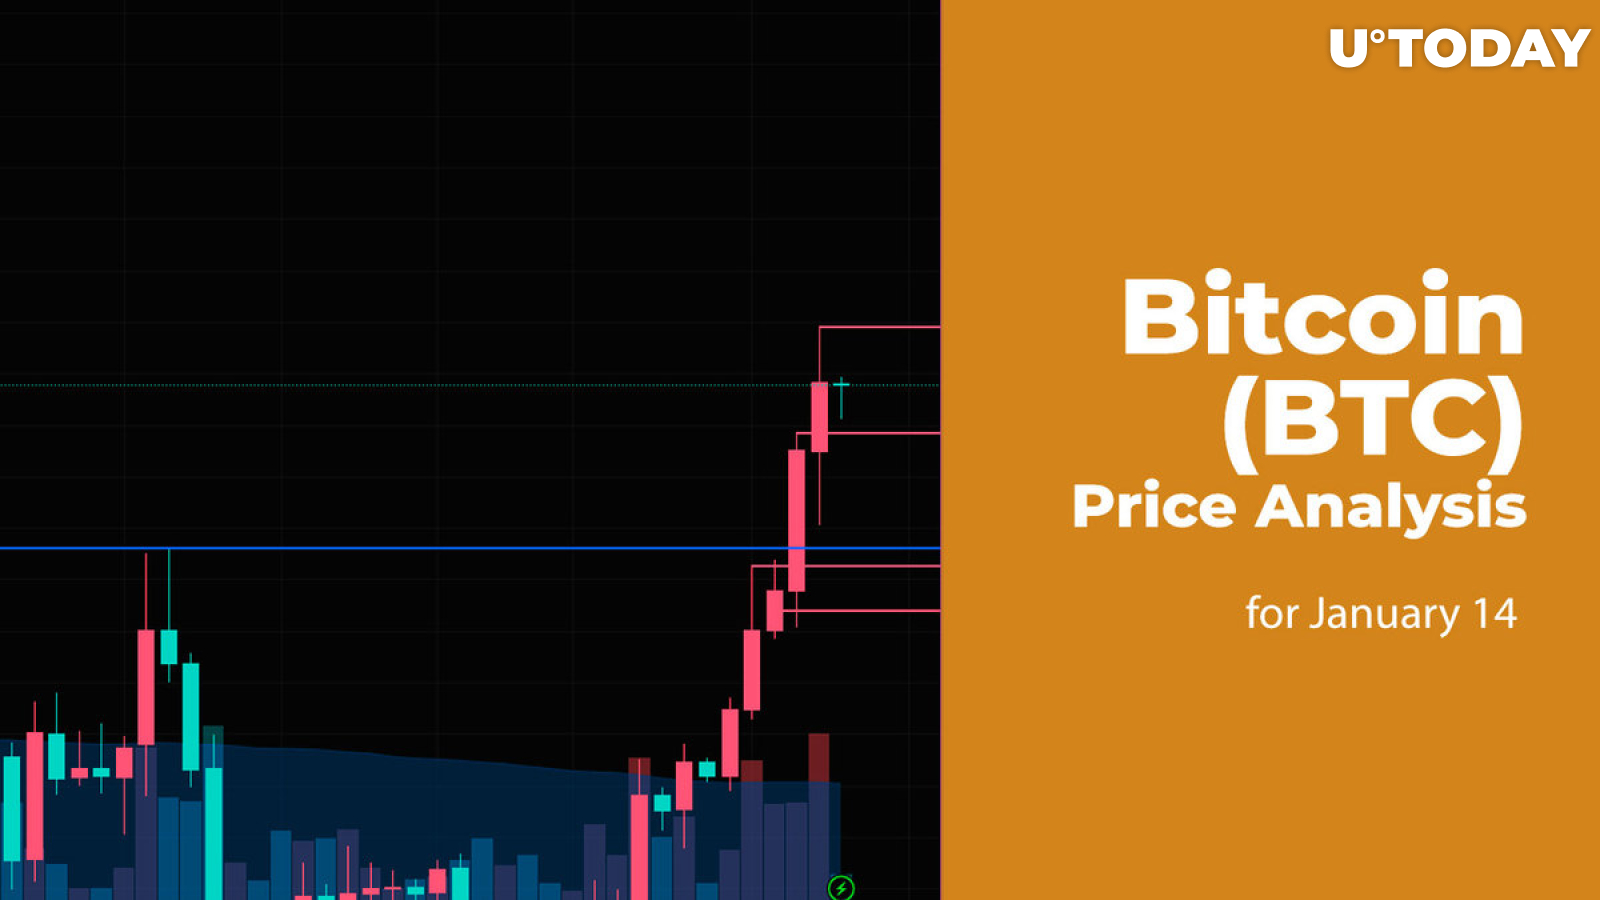 Bitcoin (BTC) Price Analysis for January 14